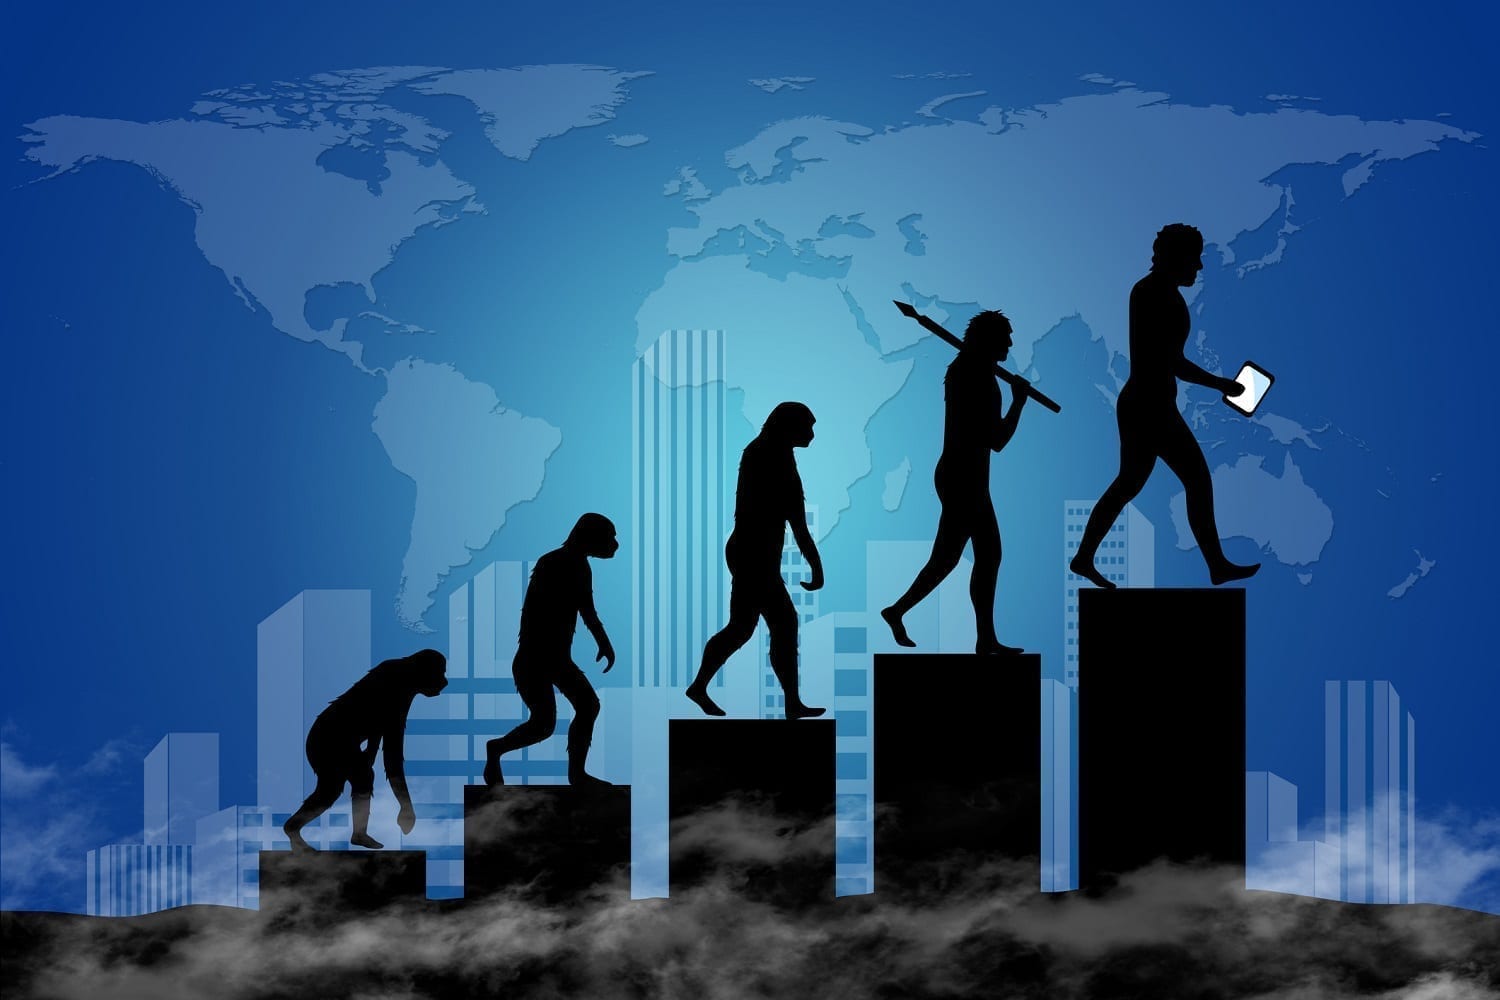 Graphic portraying human evolution upward against a city and map backdrop: ID 101247289 © Matej Ograjenšek | Dreamstime.com